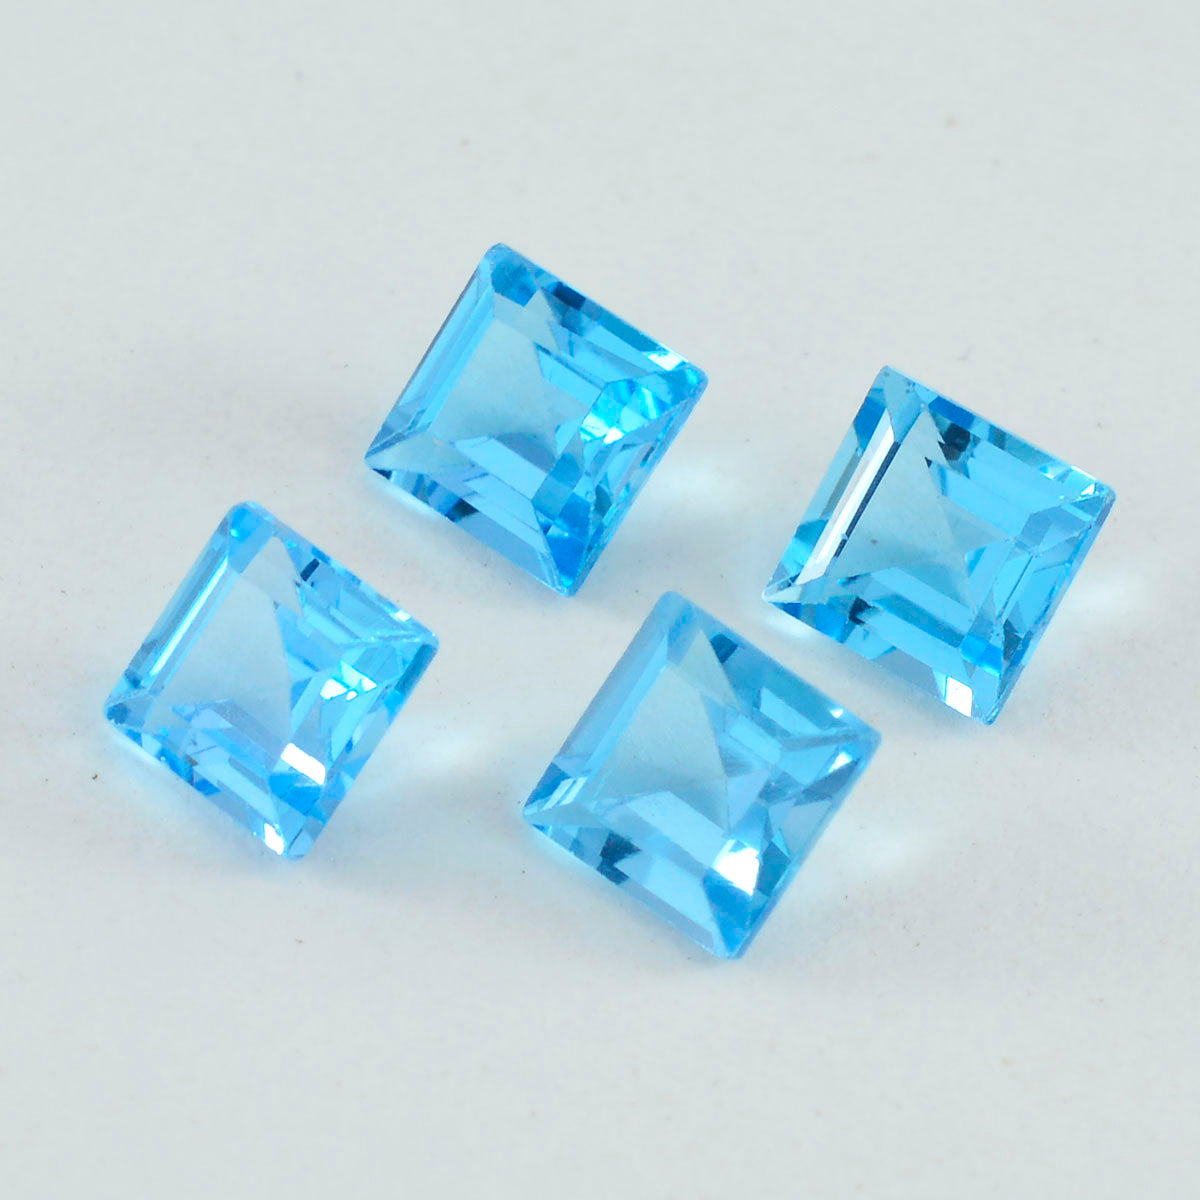 Riyogems 1PC Genuine Blue Topaz Faceted 10x10 mm Square Shape handsome Quality Loose Stone